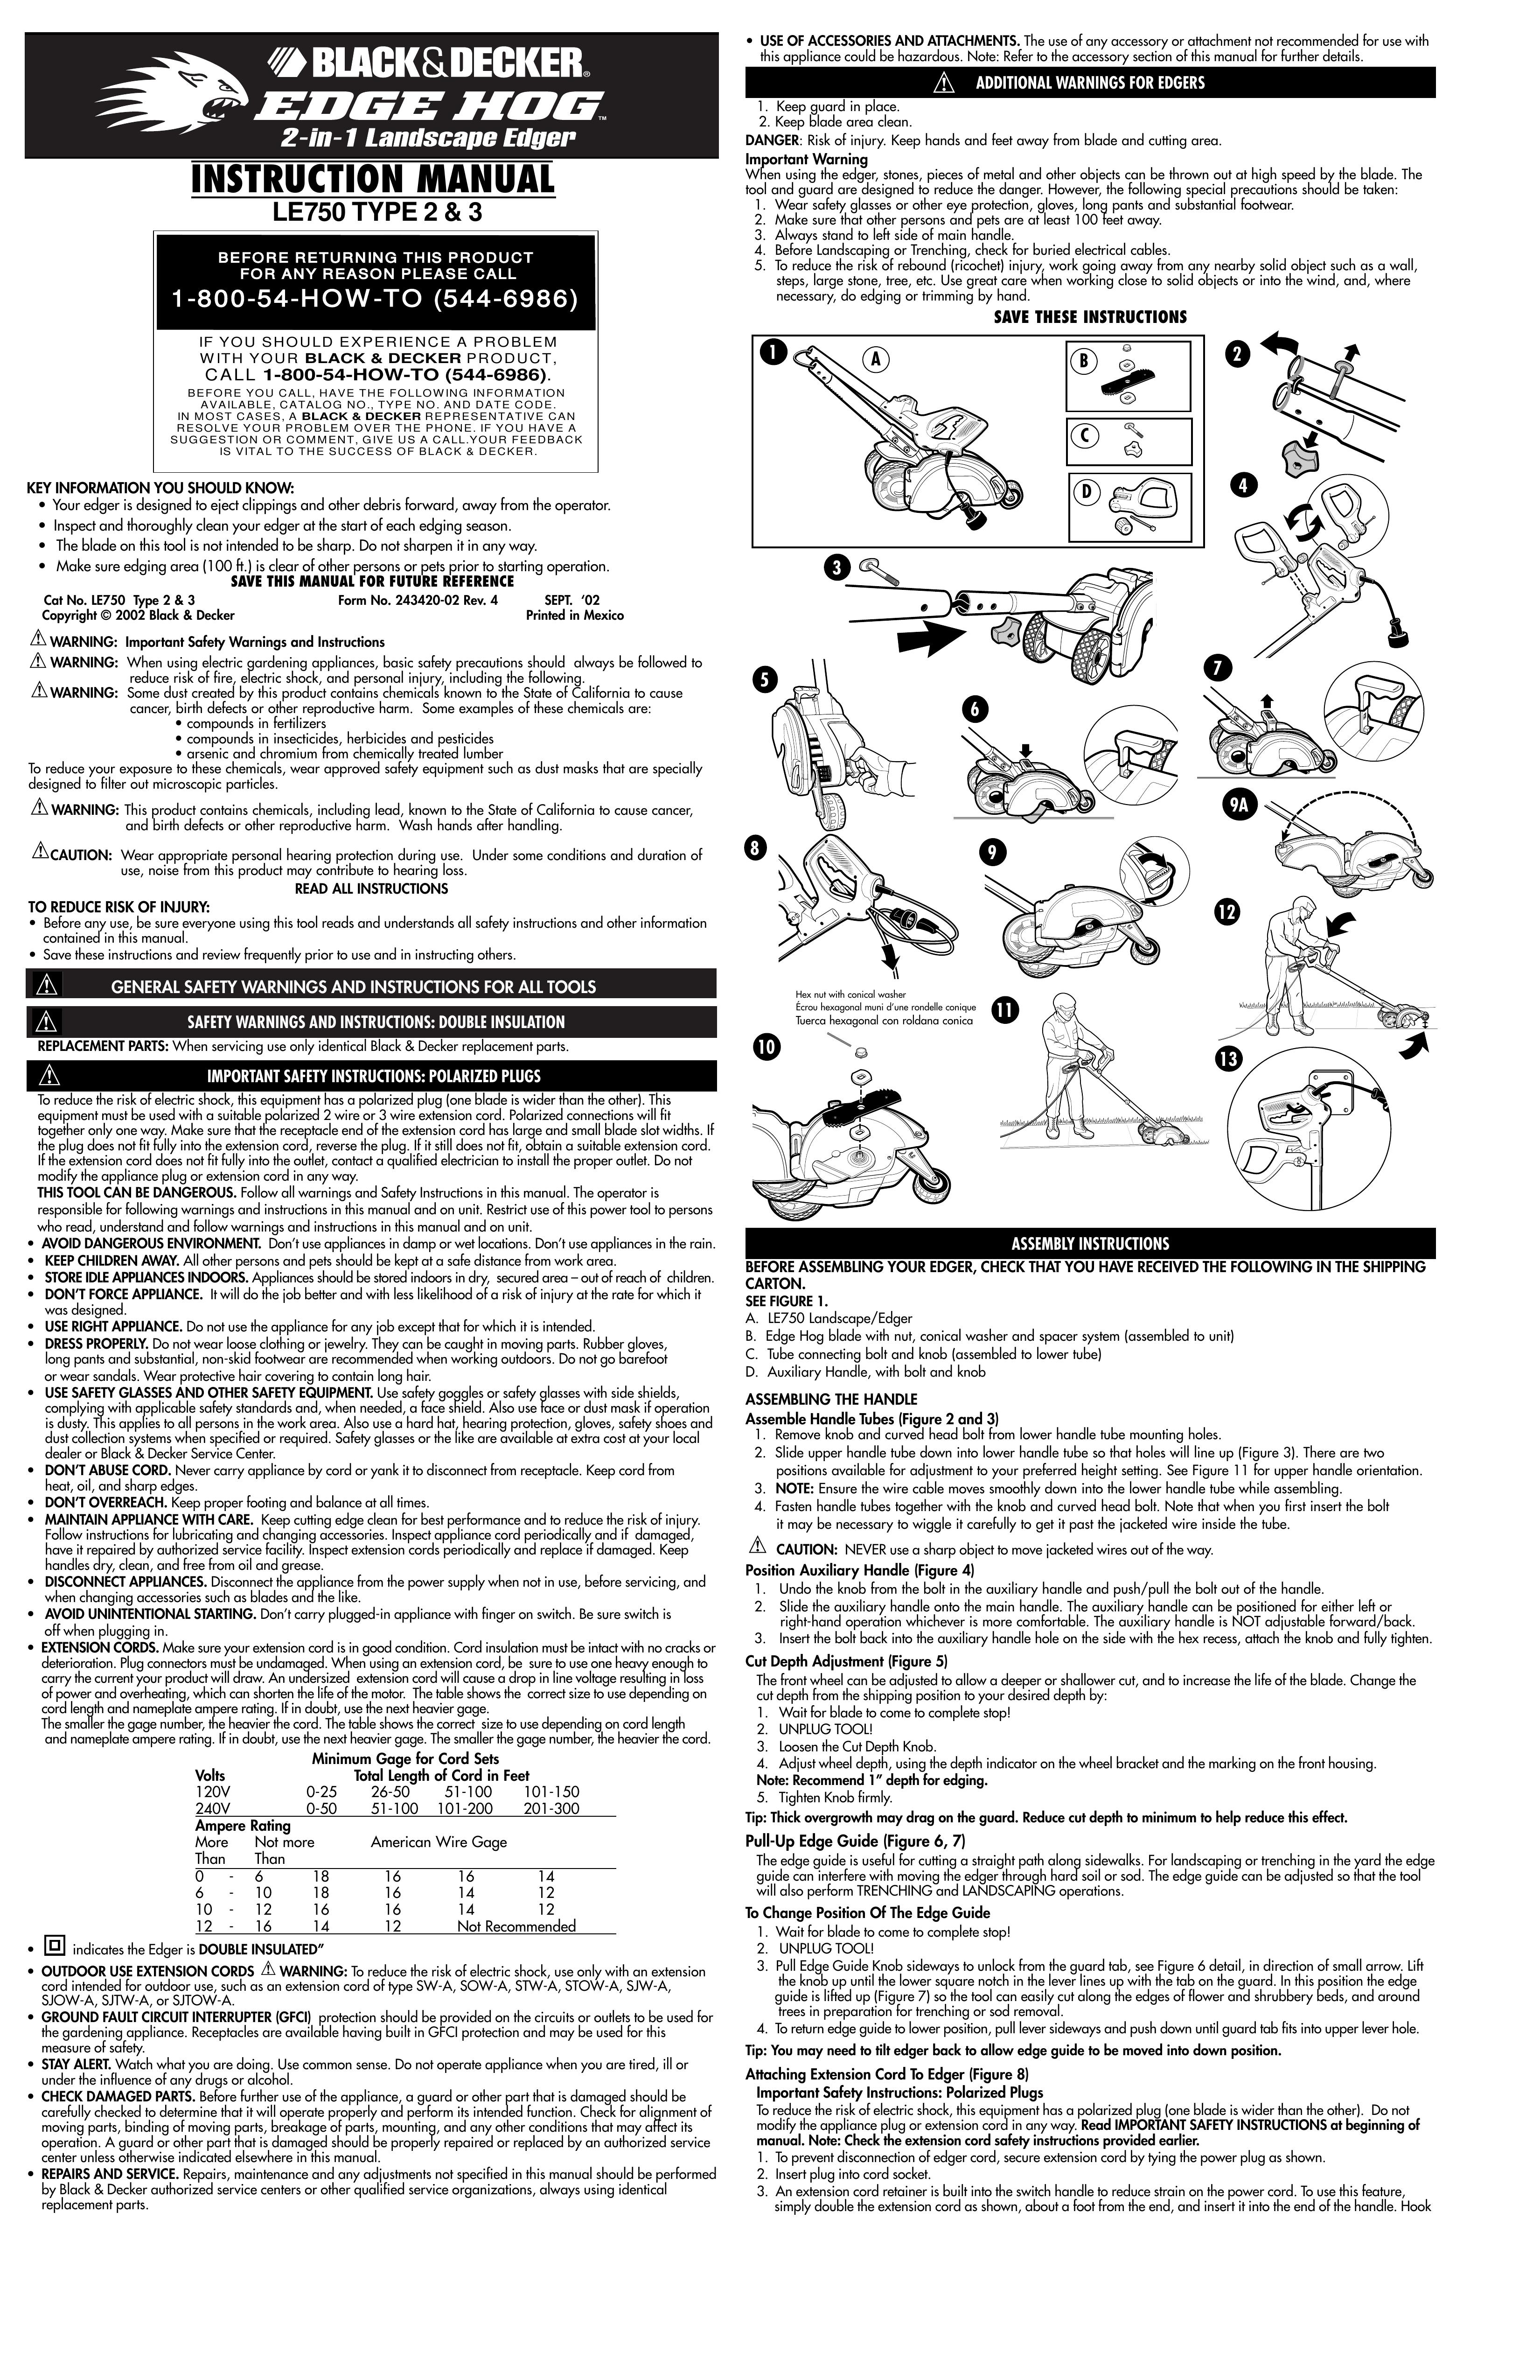 Black & Decker FHV1200W Edger User Manual